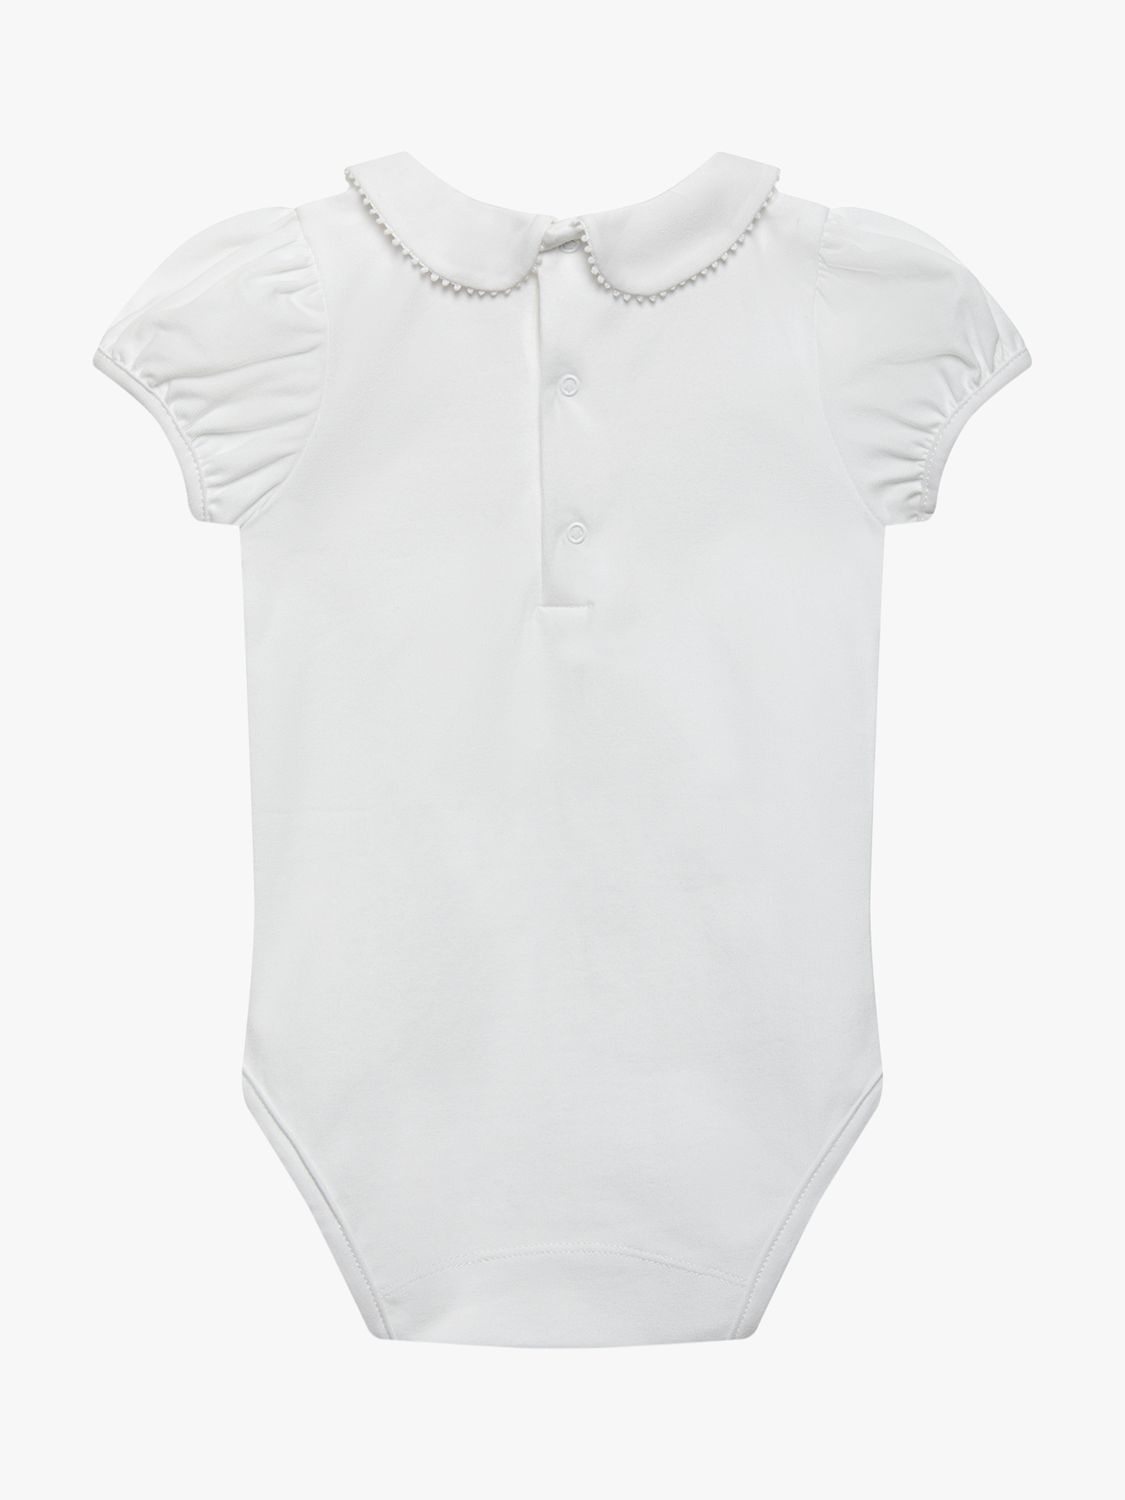 Trotters Baby Bobble Trim Peter Pan Collar Bodysuit, White, 3-6 months